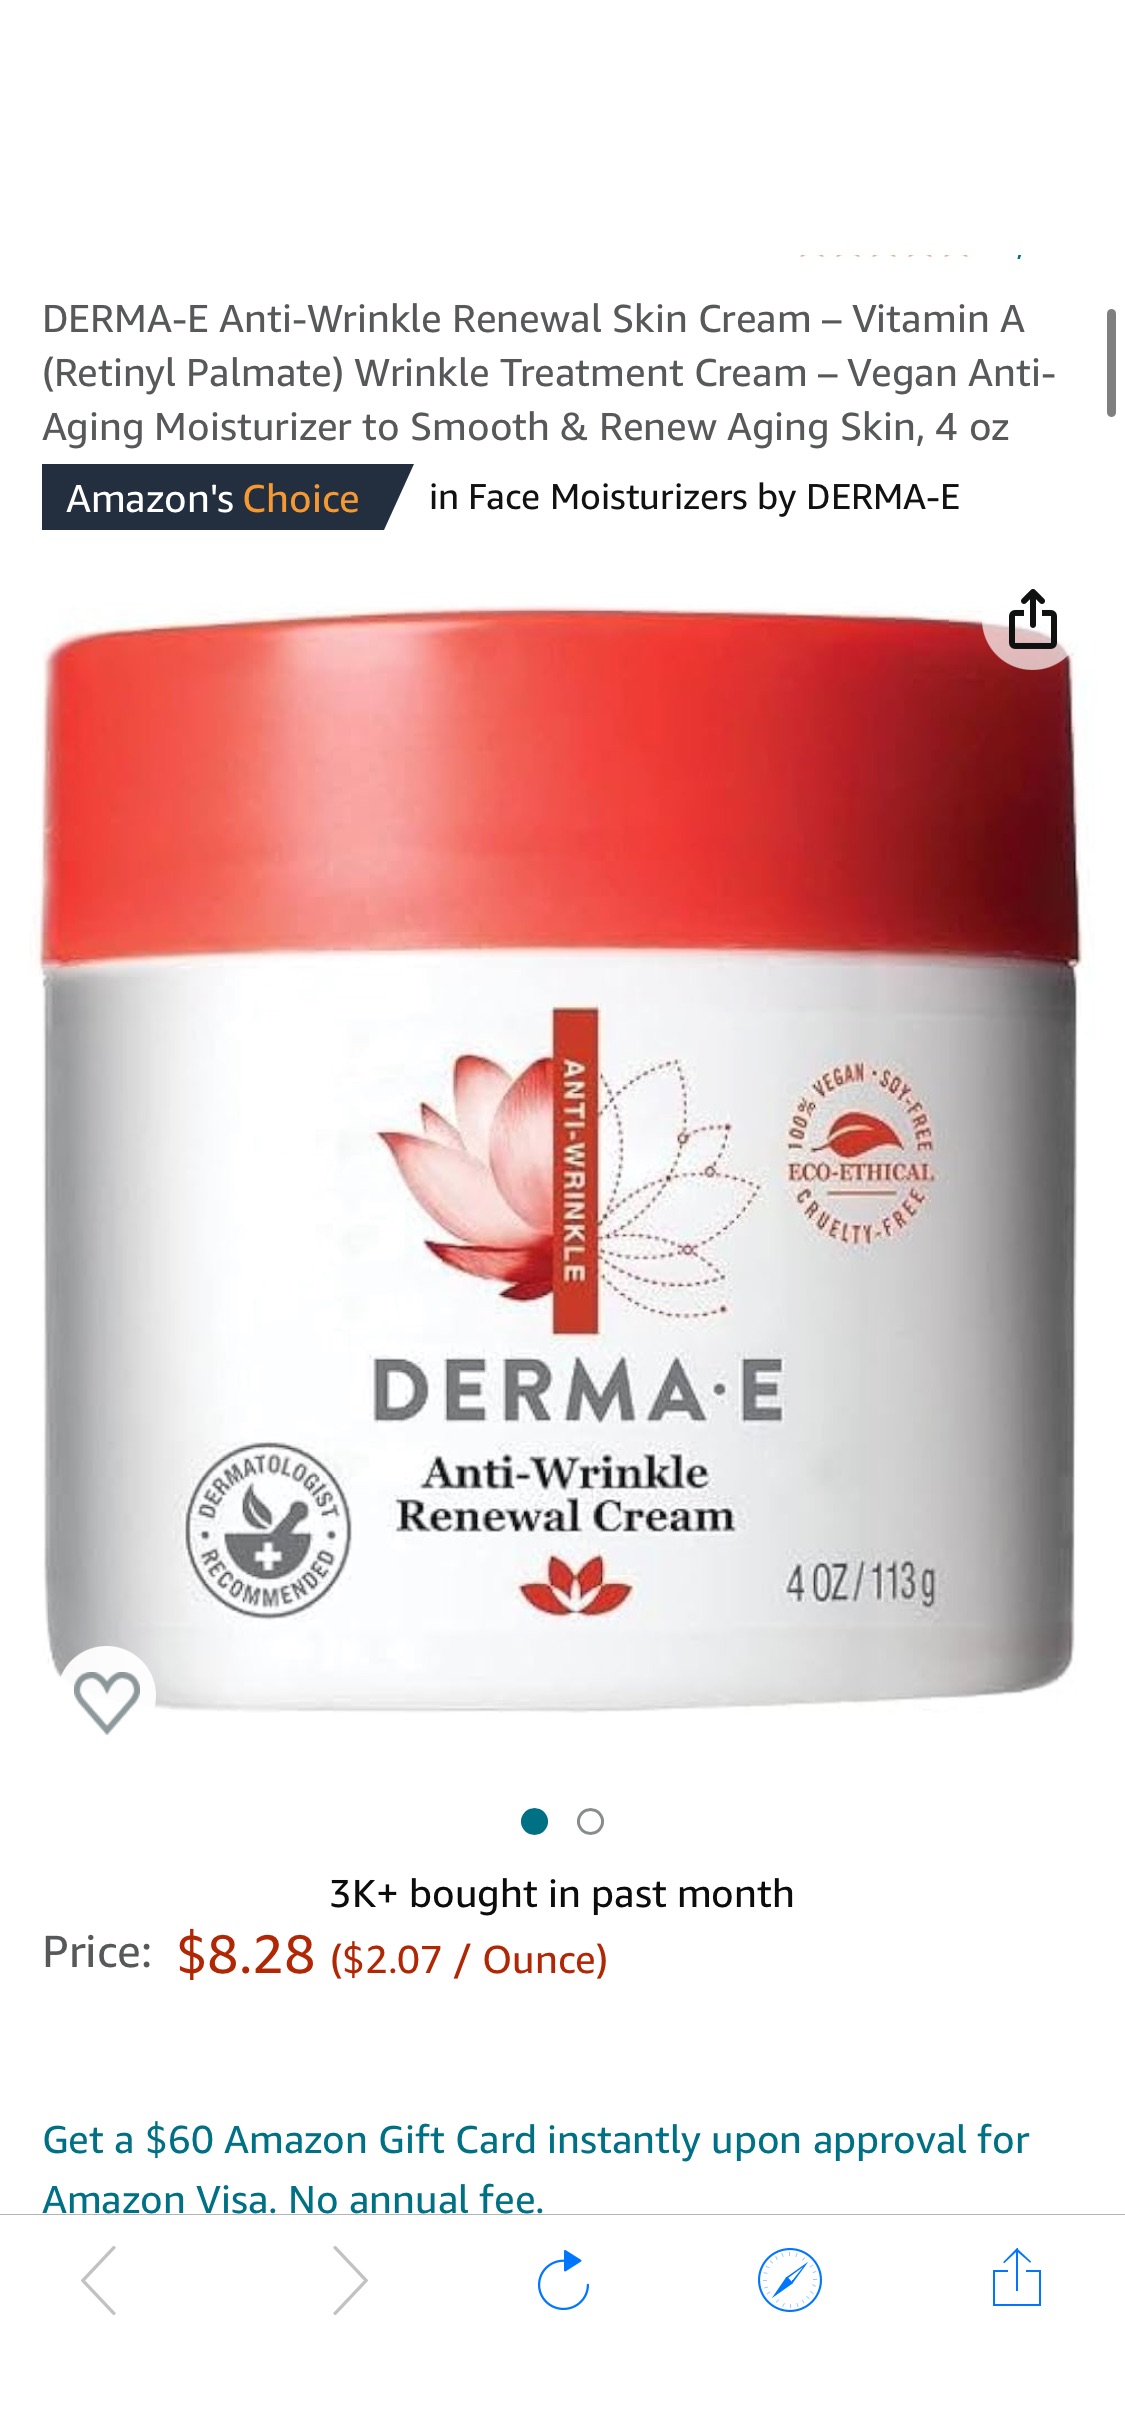 Amazon.com: DERMA-E Anti-Wrinkle Renewal Skin Cream – Vitamin A (Retinyl Palmate) Wrinkle Treatment Cream – Vegan Anti-Aging Moisturizer to Smooth & Renew Aging Skin, 4 oz : Beauty & Personal Care